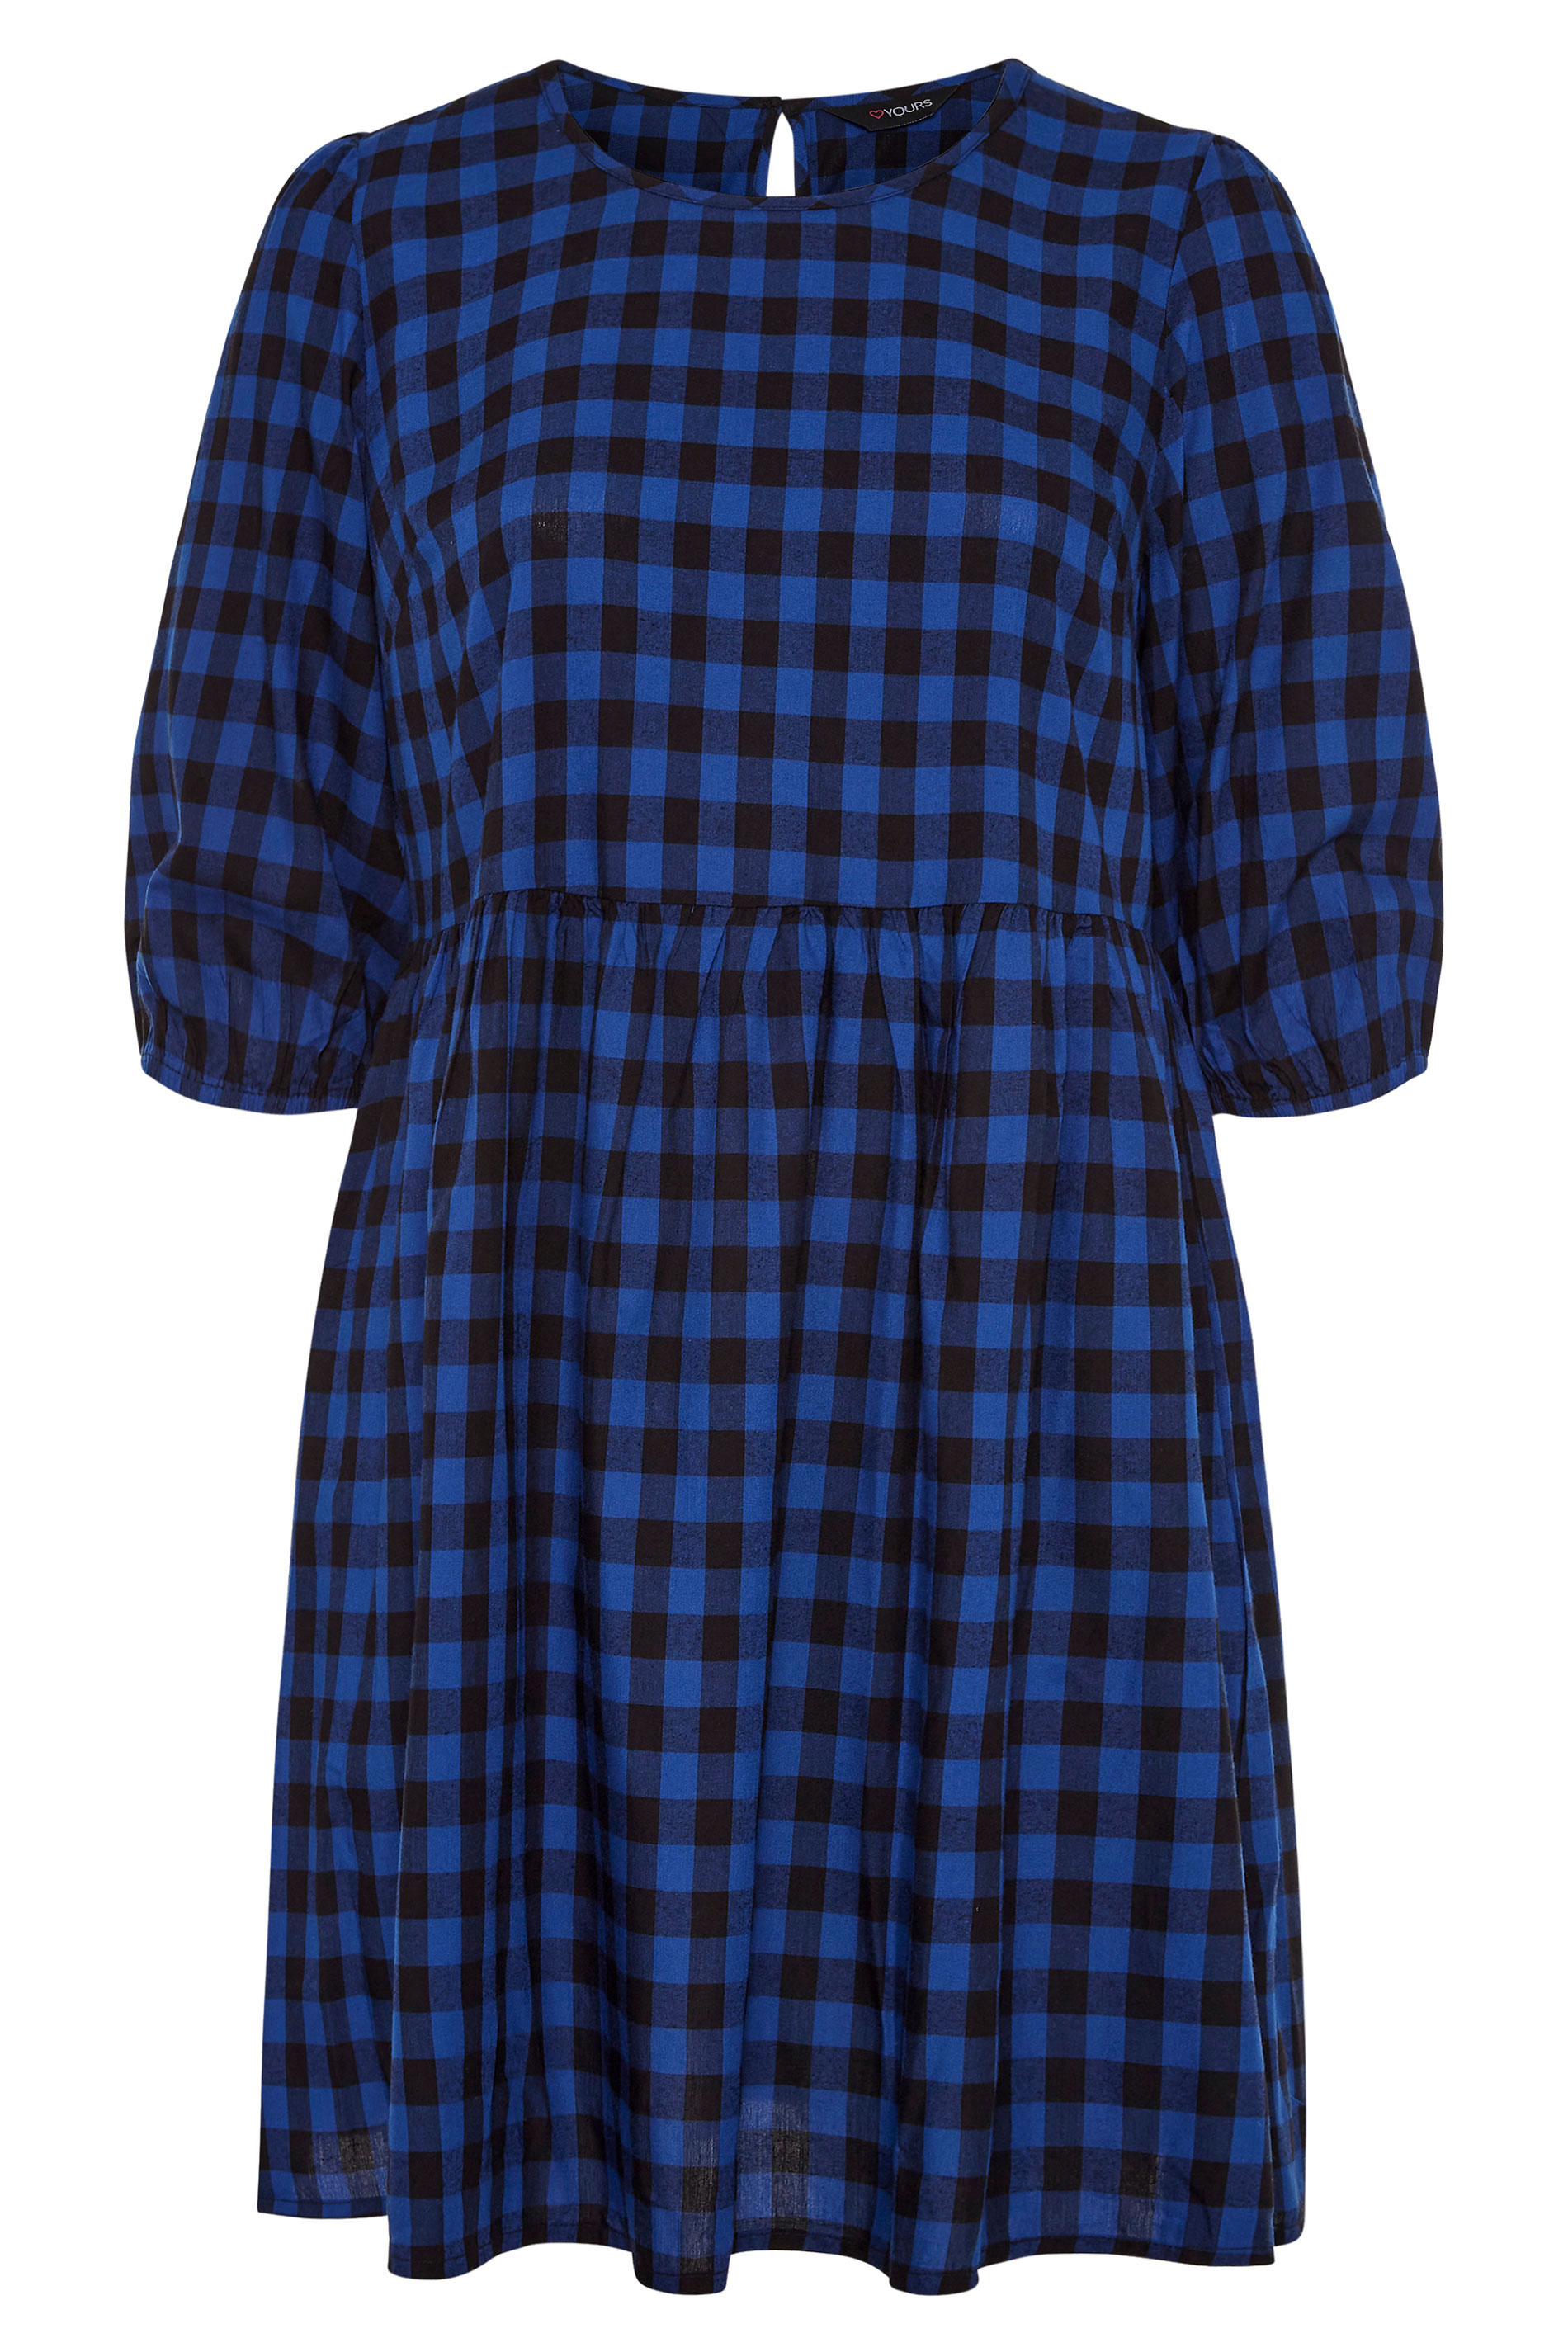 Plus Size Cobalt Blue Gingham Peplum Mini Dress | Yours Clothing